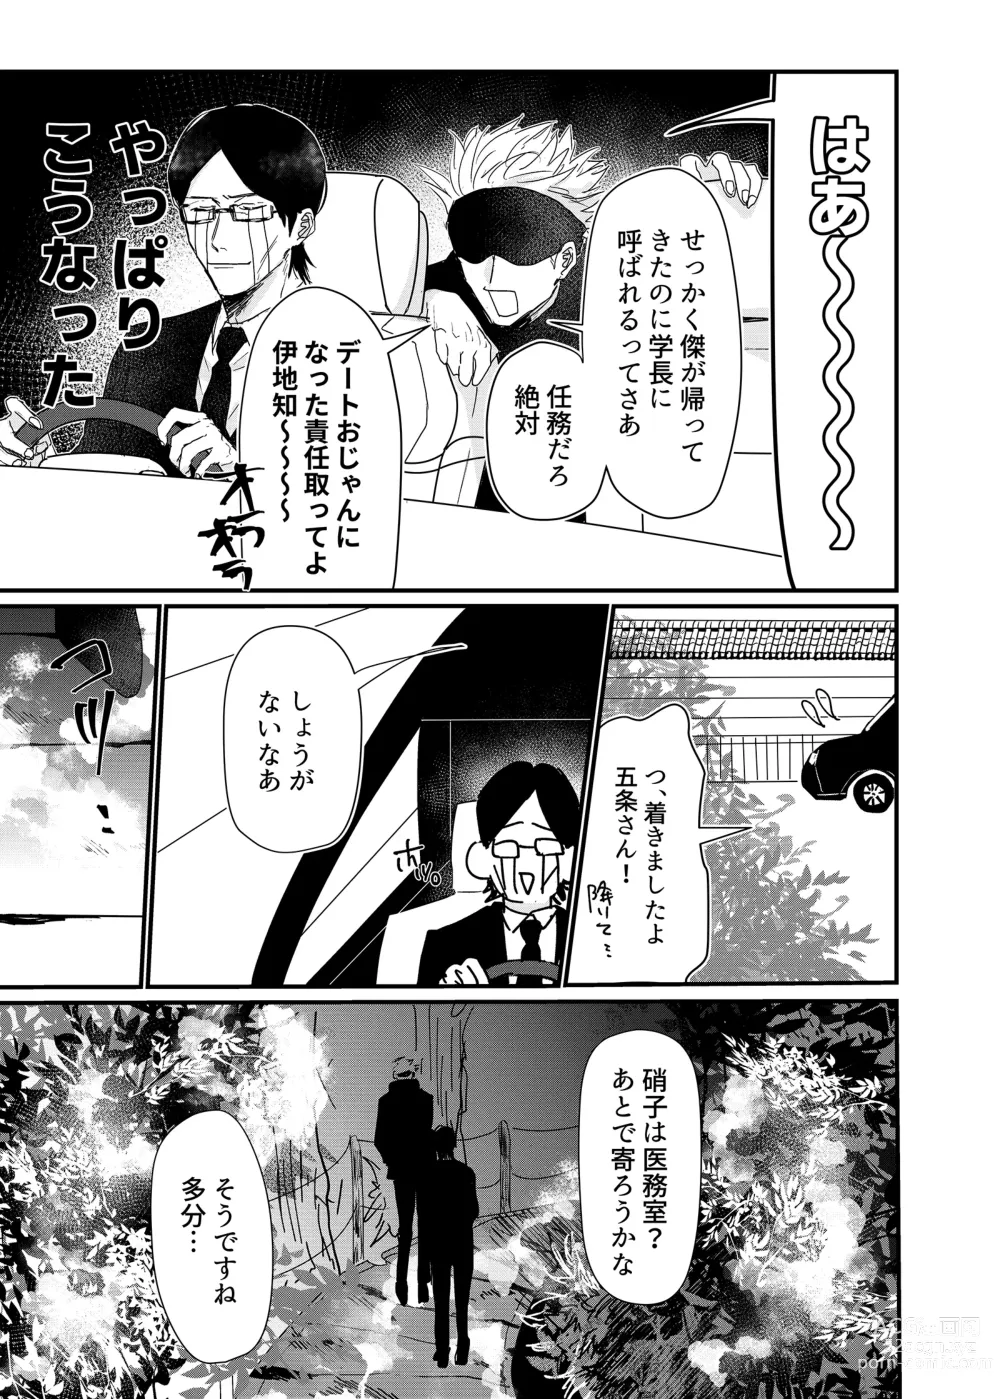 Page 16 of doujinshi Manjushage no Yume no Naka